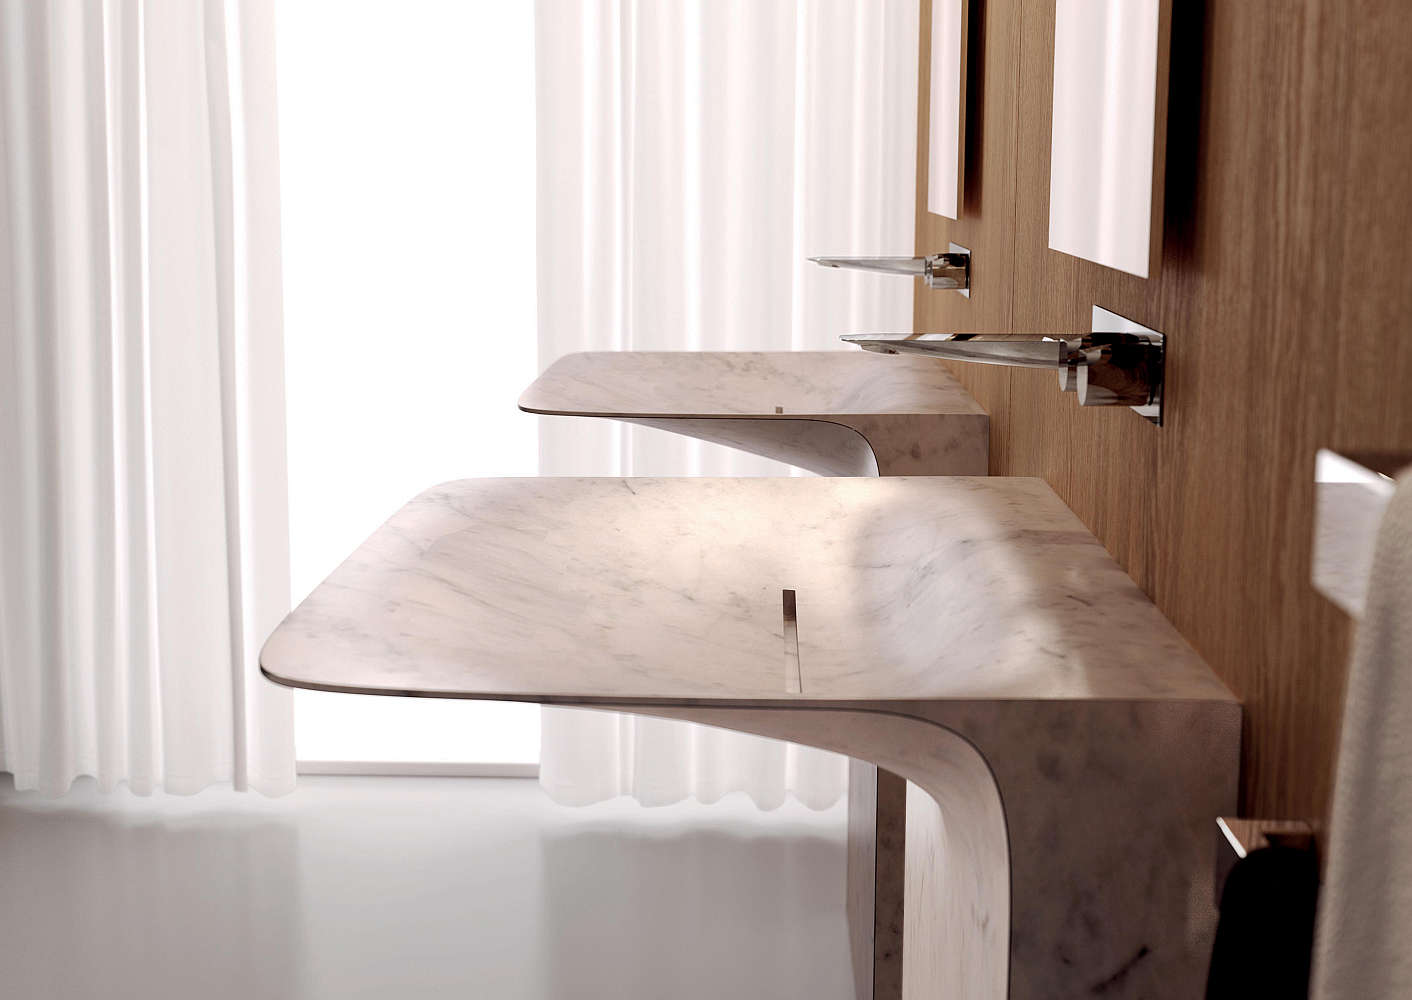 Low profile pedestal sink in Carrara marble